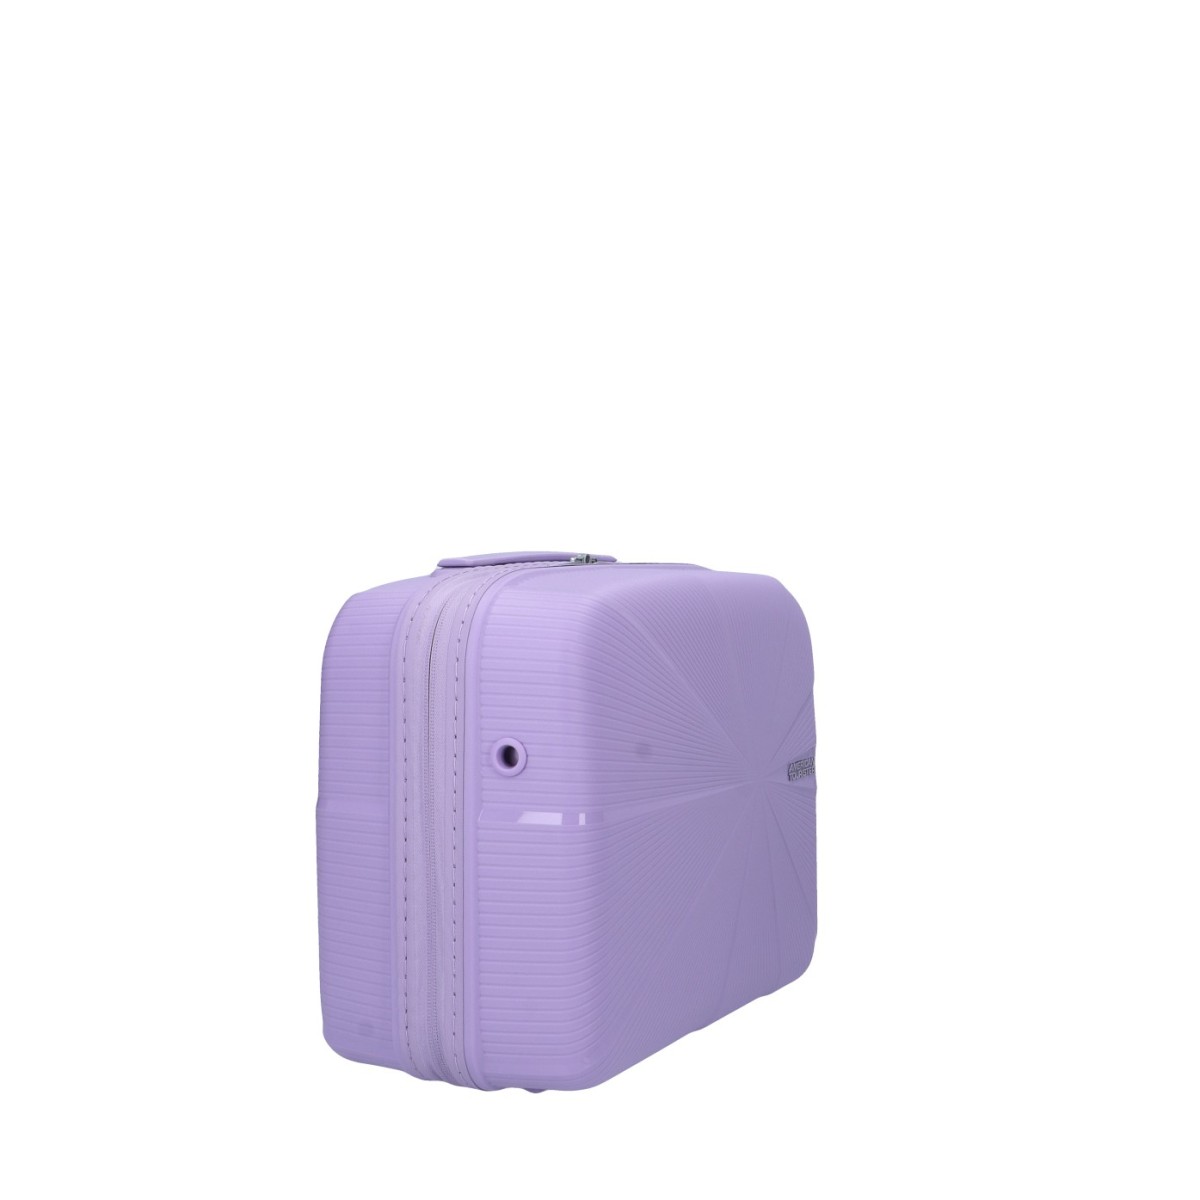 American tourister by samsonite Beauty case Digital lavander Starvibe MD5*81001